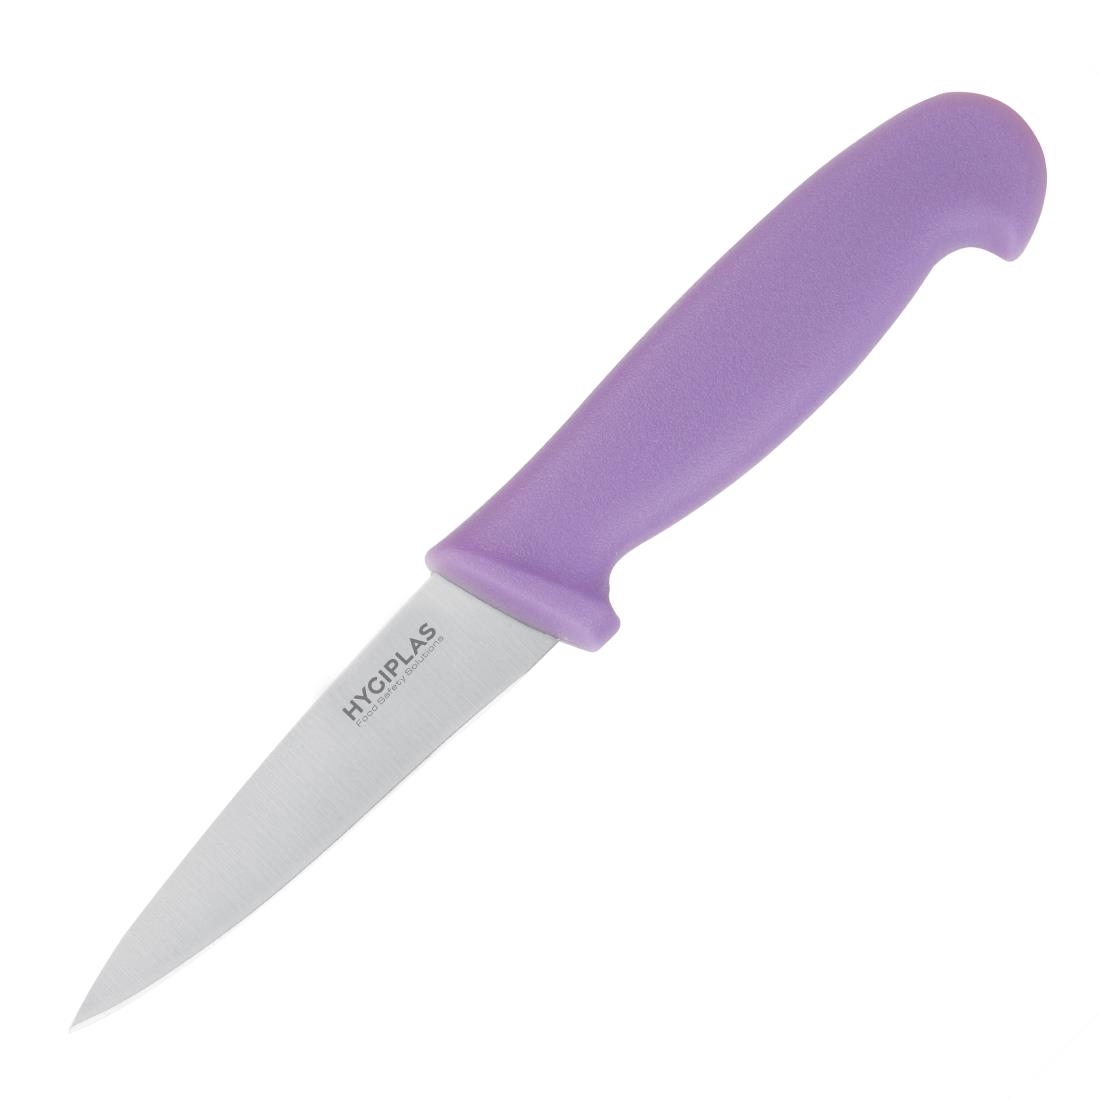 Hygiplas Paring Knife Purple 8.9cm